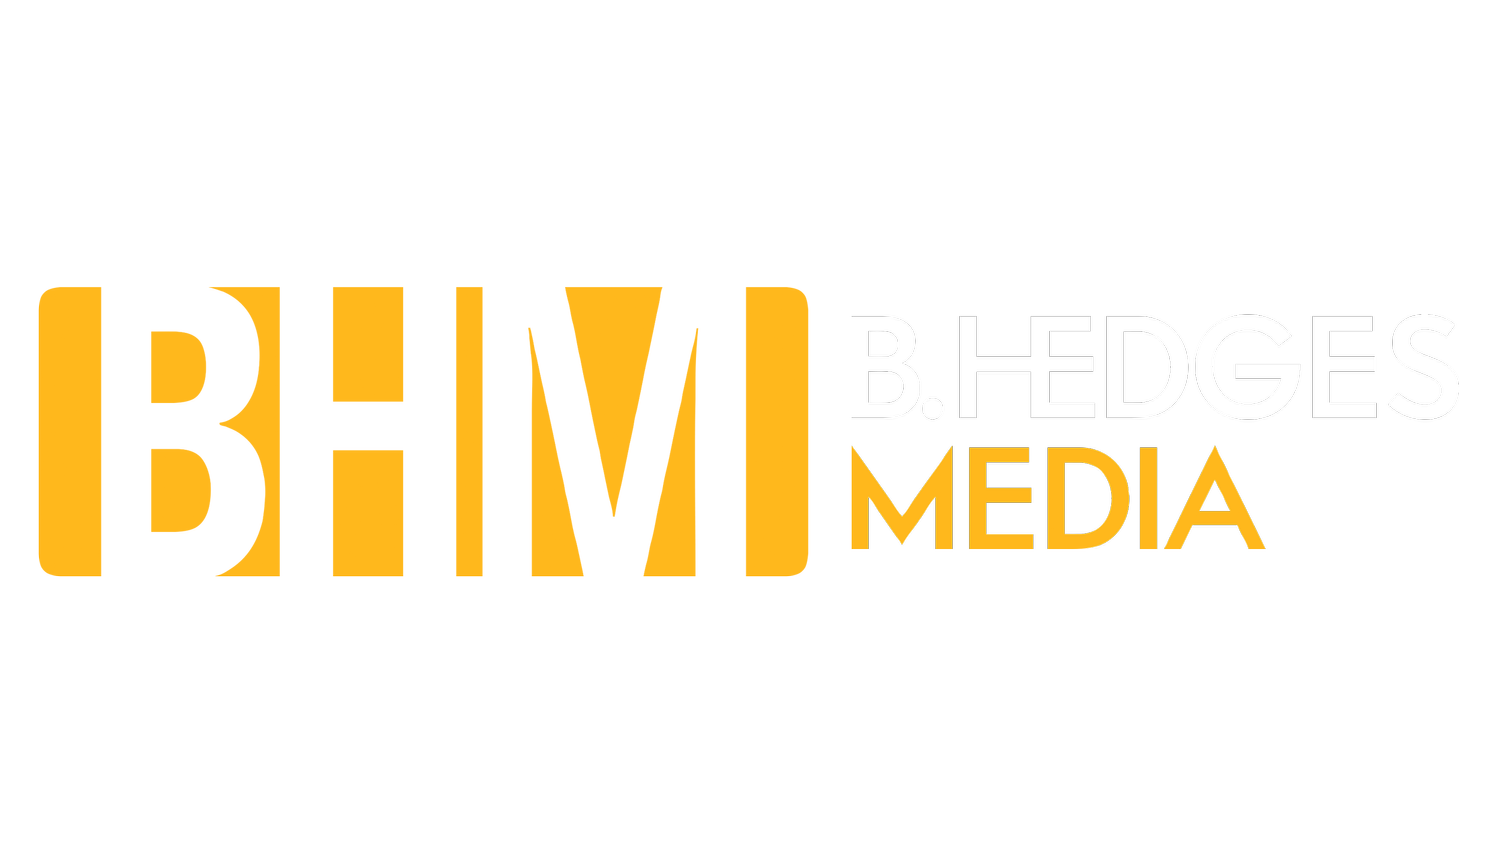 B.Hedges Media - Harare Creative Agency